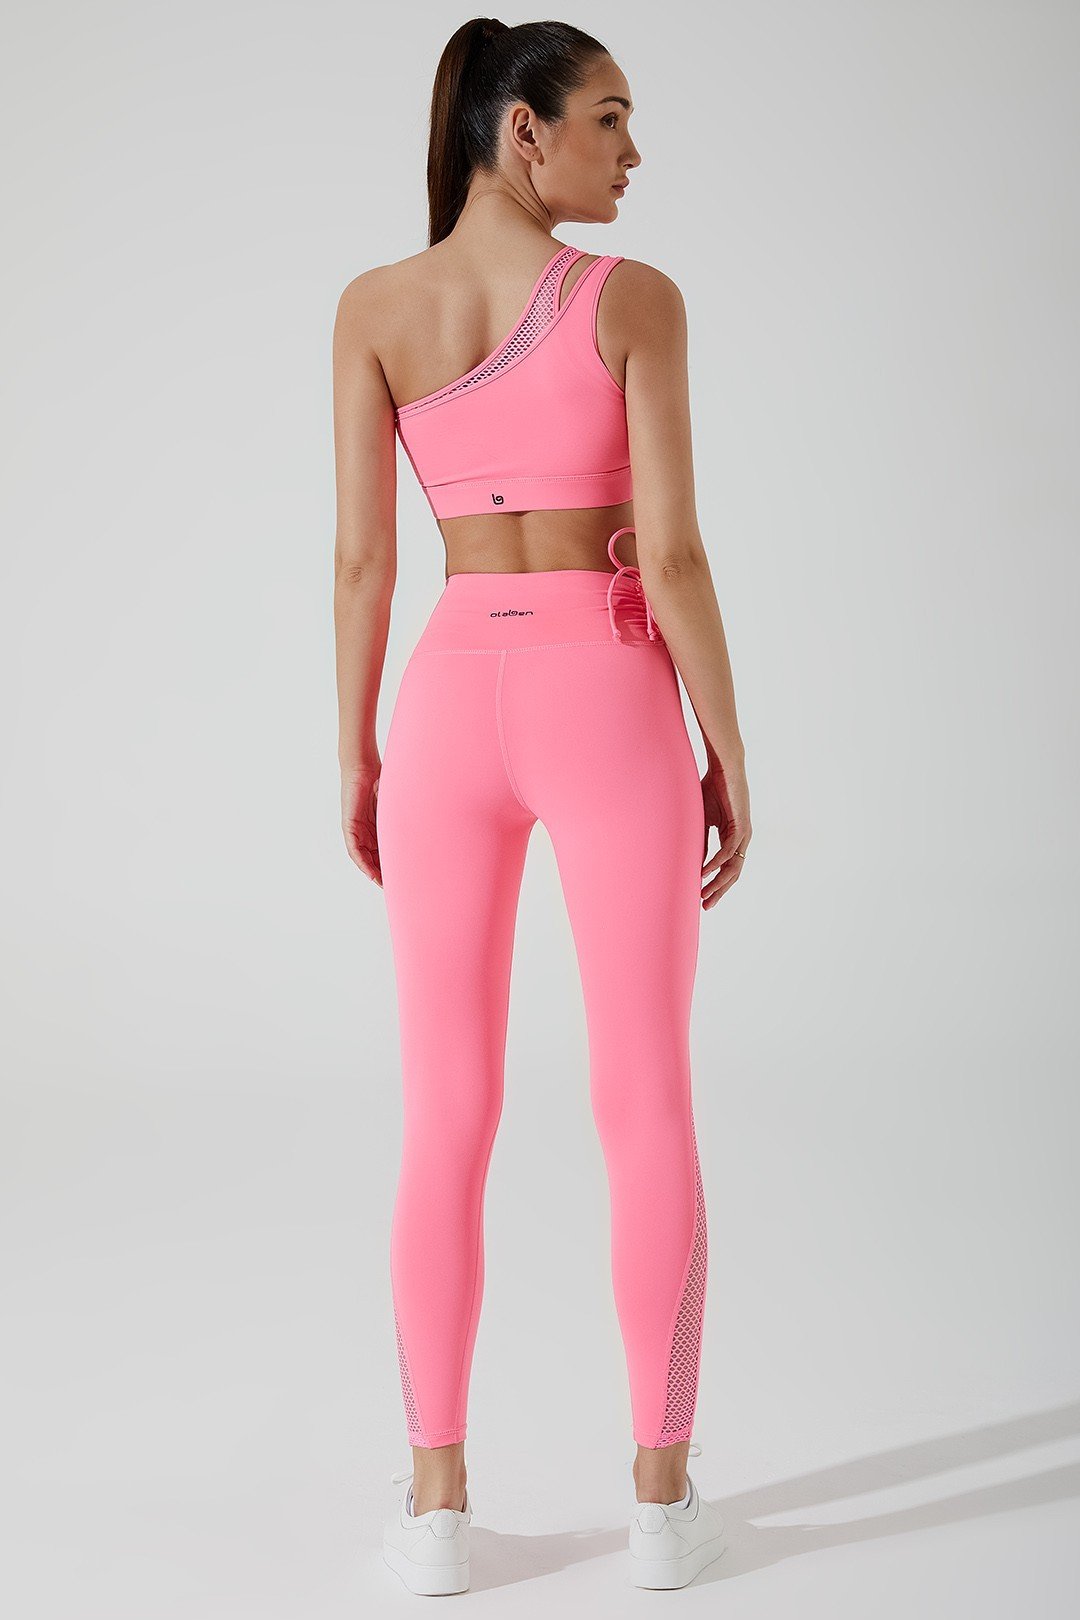 Cotton candy pink Clarita mesh leggings for women, size 4, OW-0100-WLG-PK.